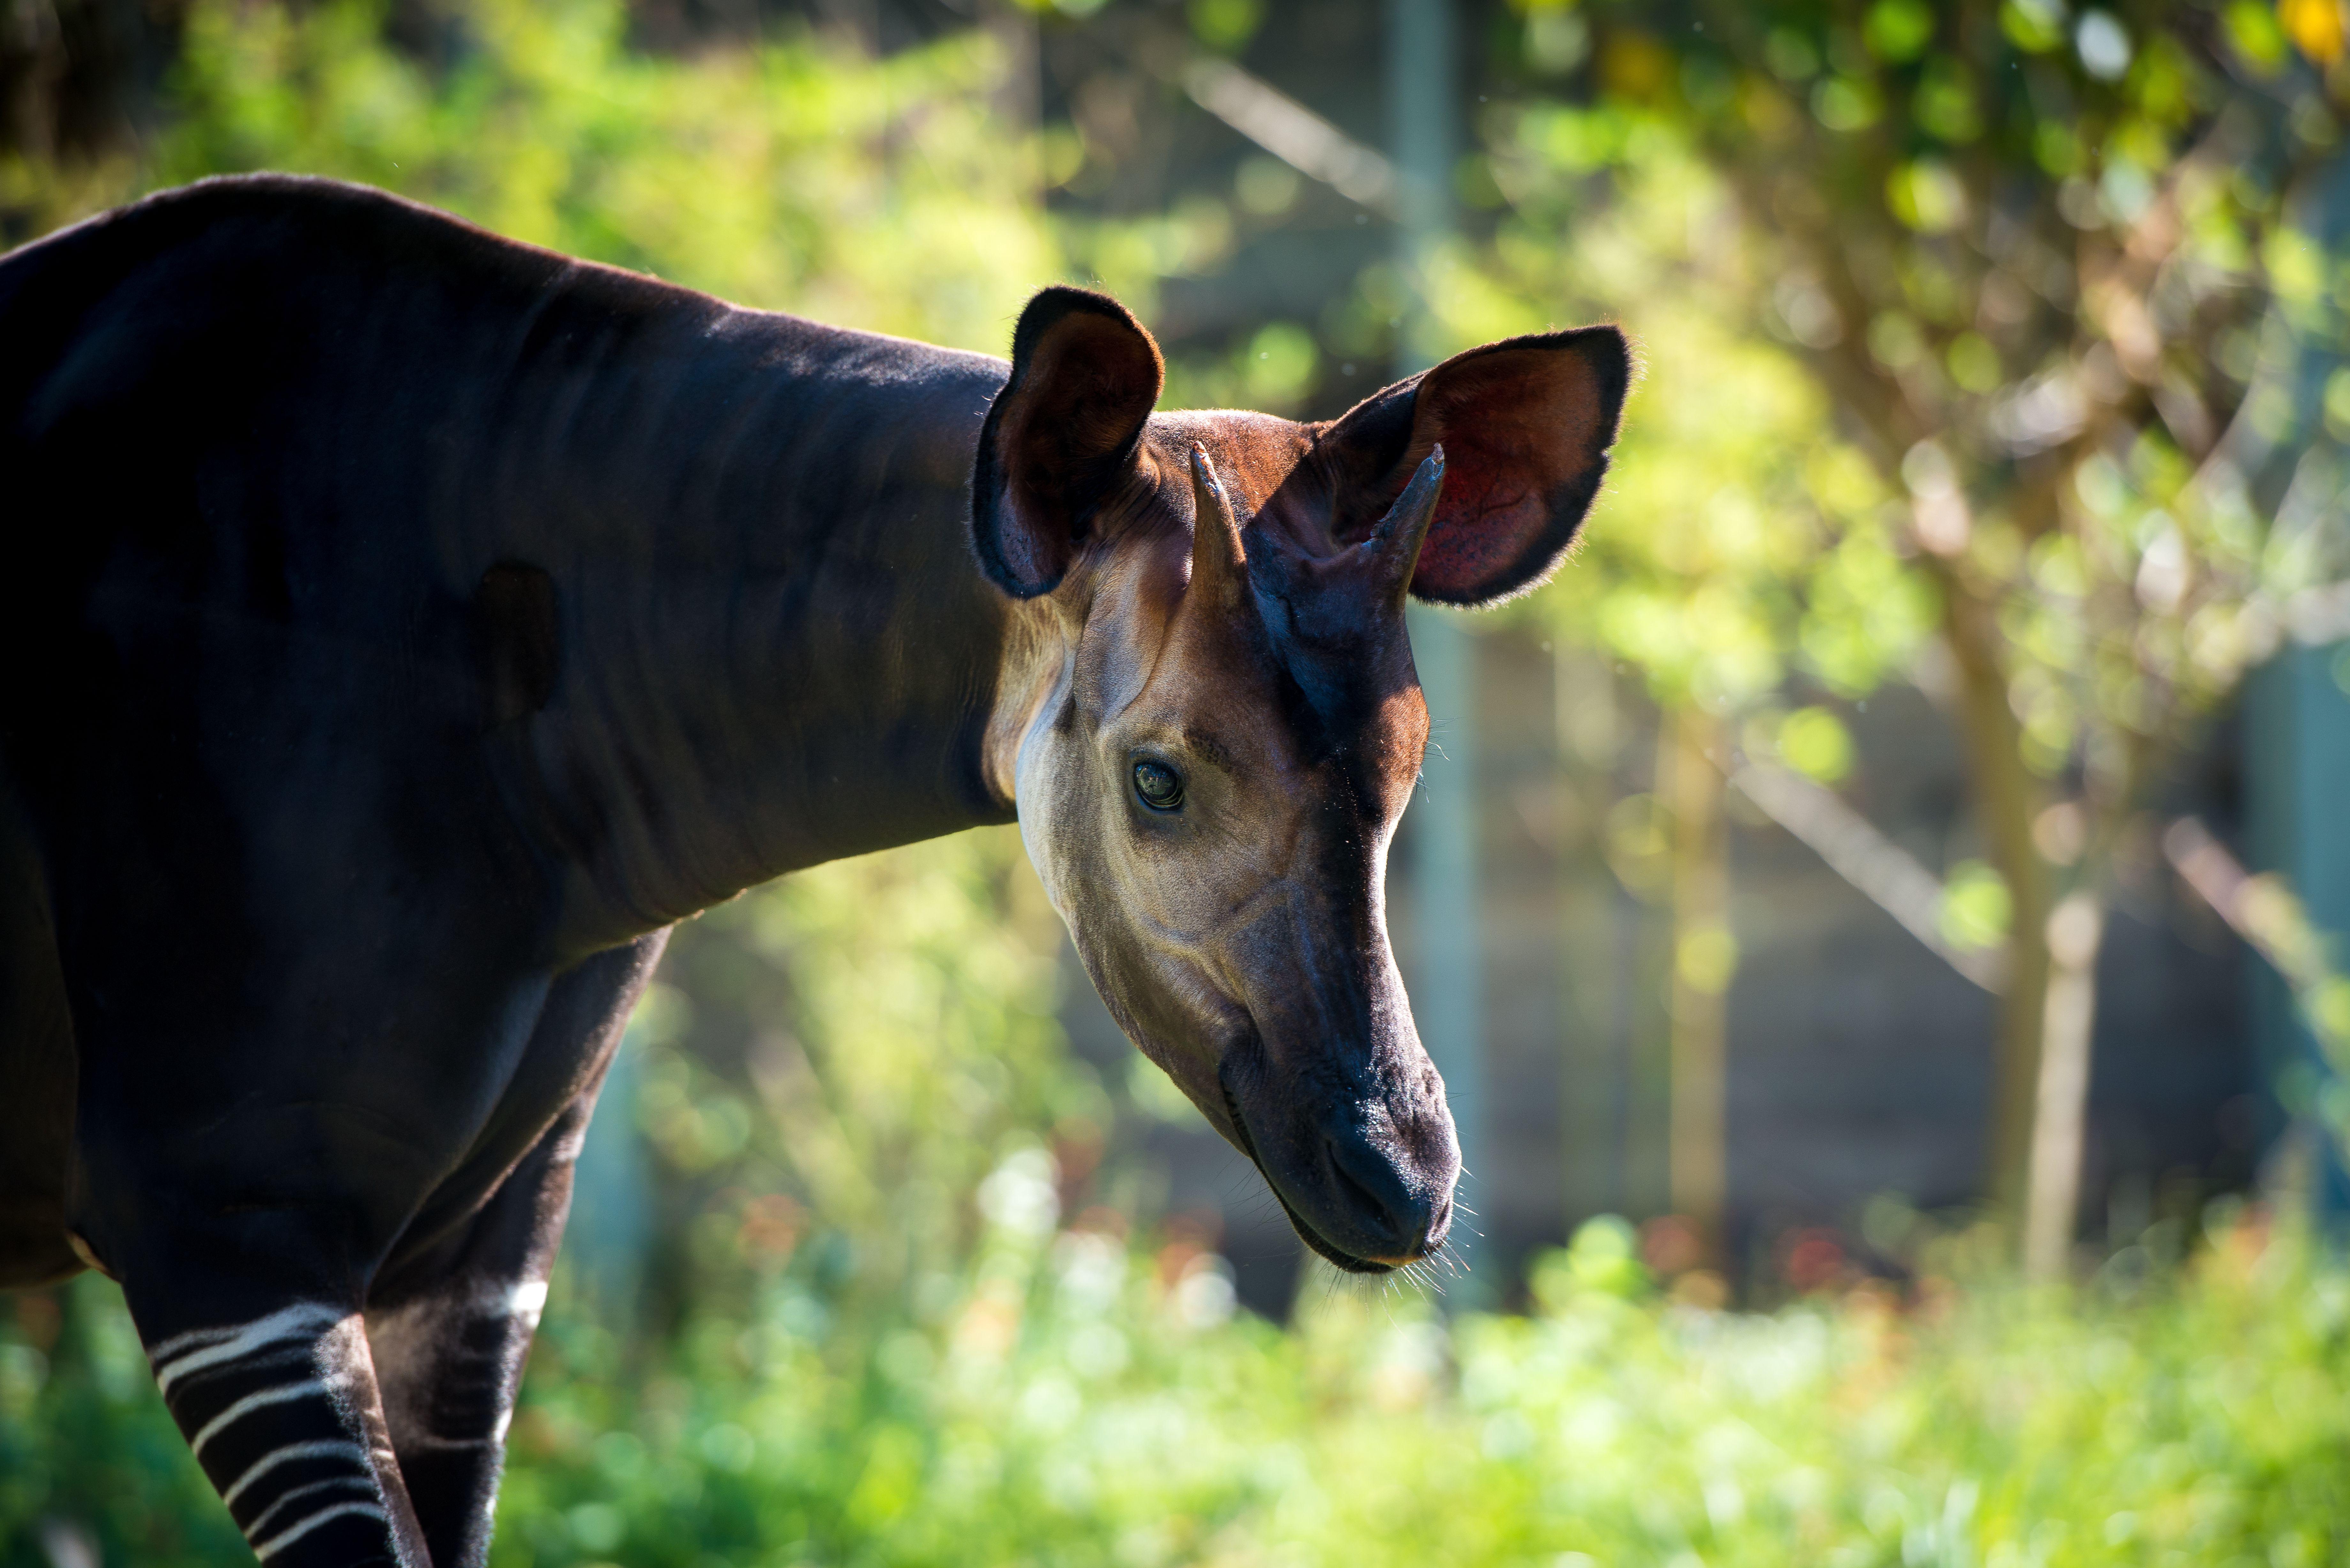 Meet the Okapis